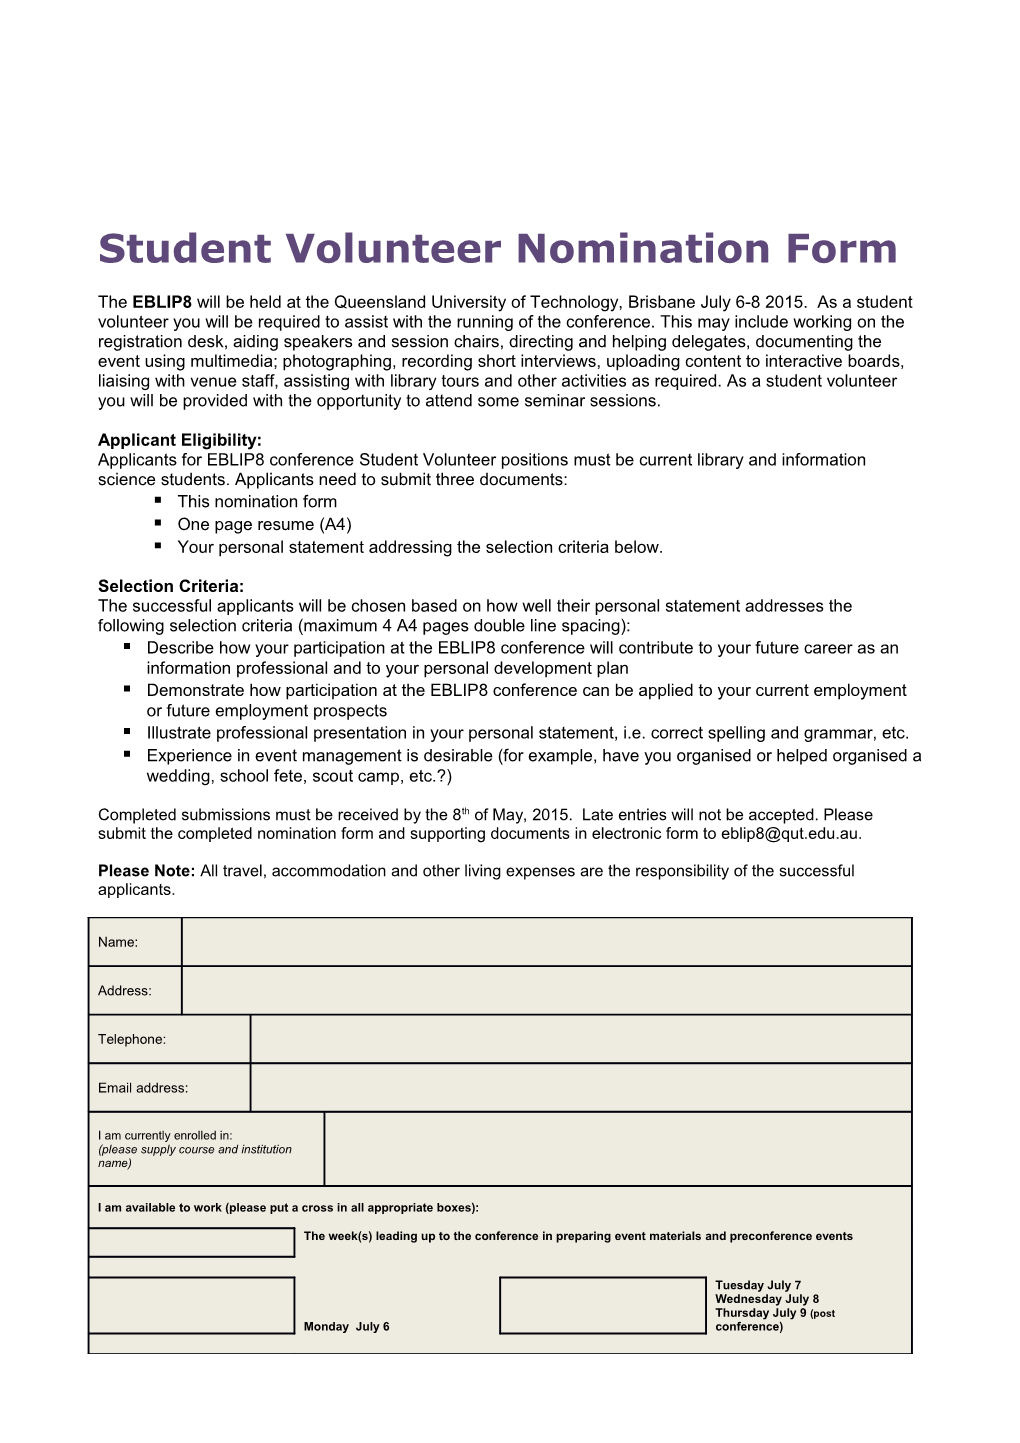 Student Volunteer Nomination Form